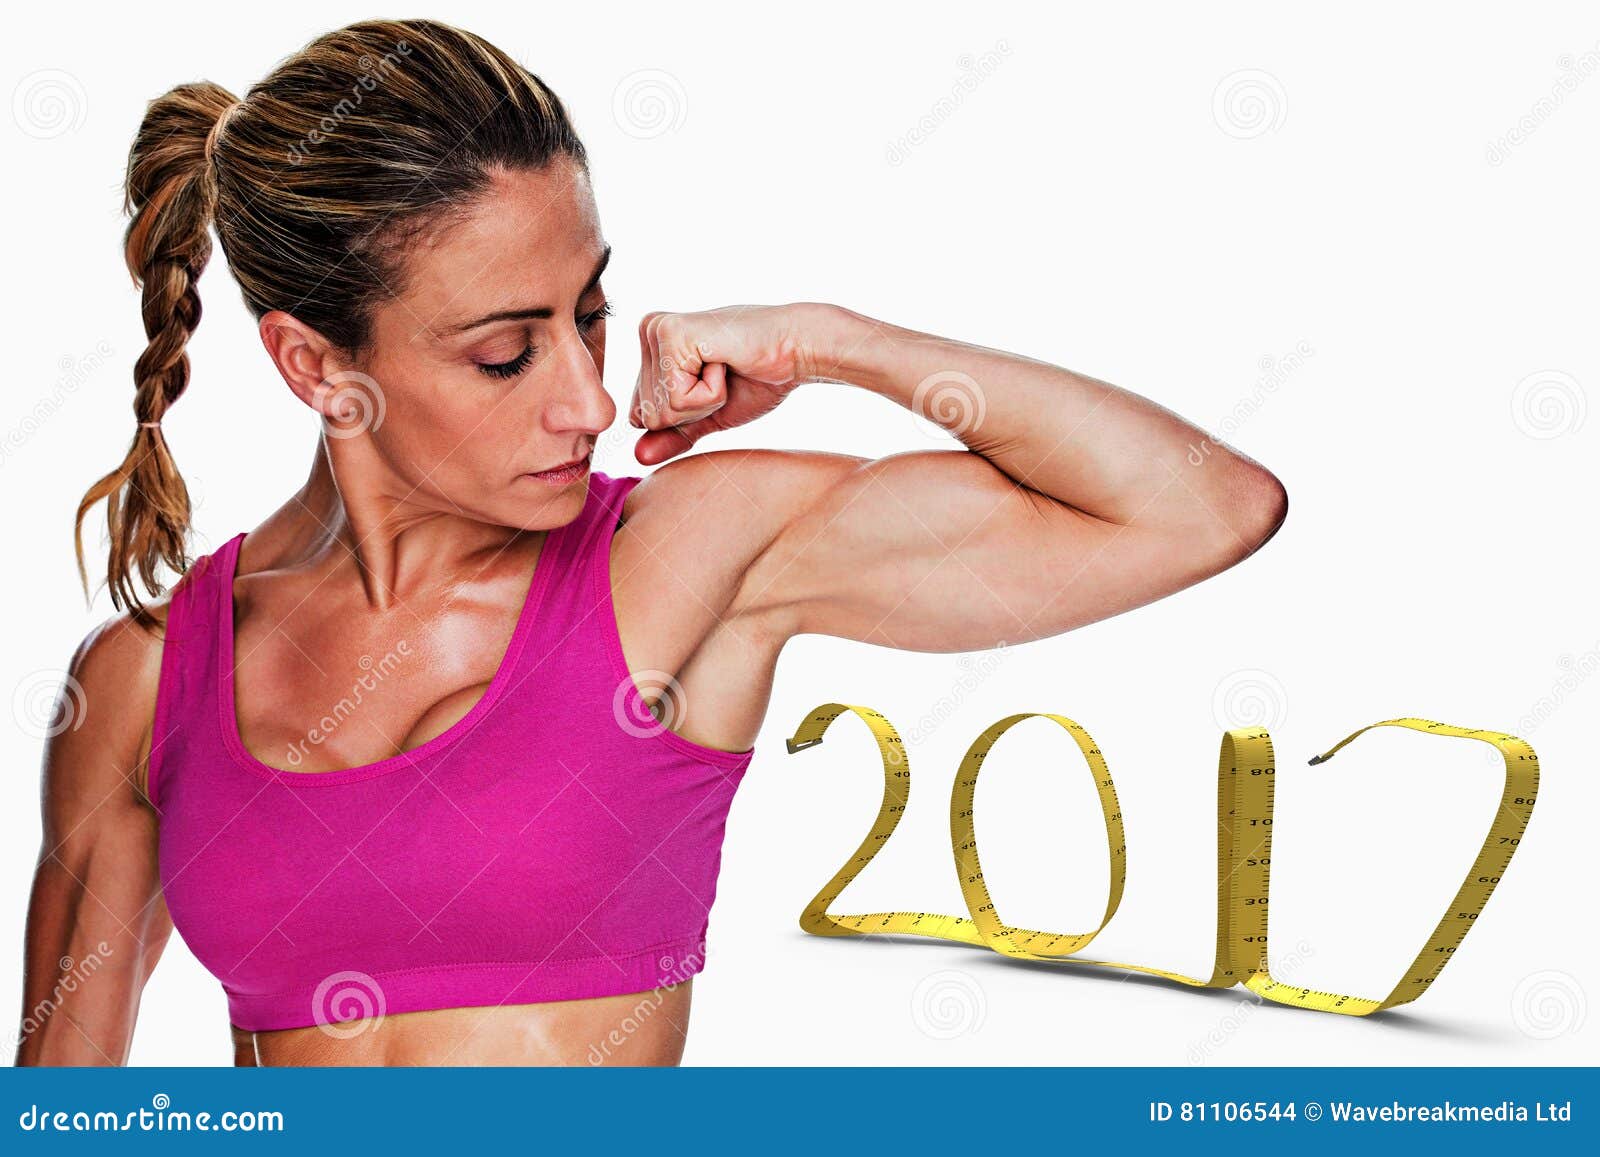 d composite image female bodybuilder flexing bicep pink sports bra against white background vignette new year 81106544